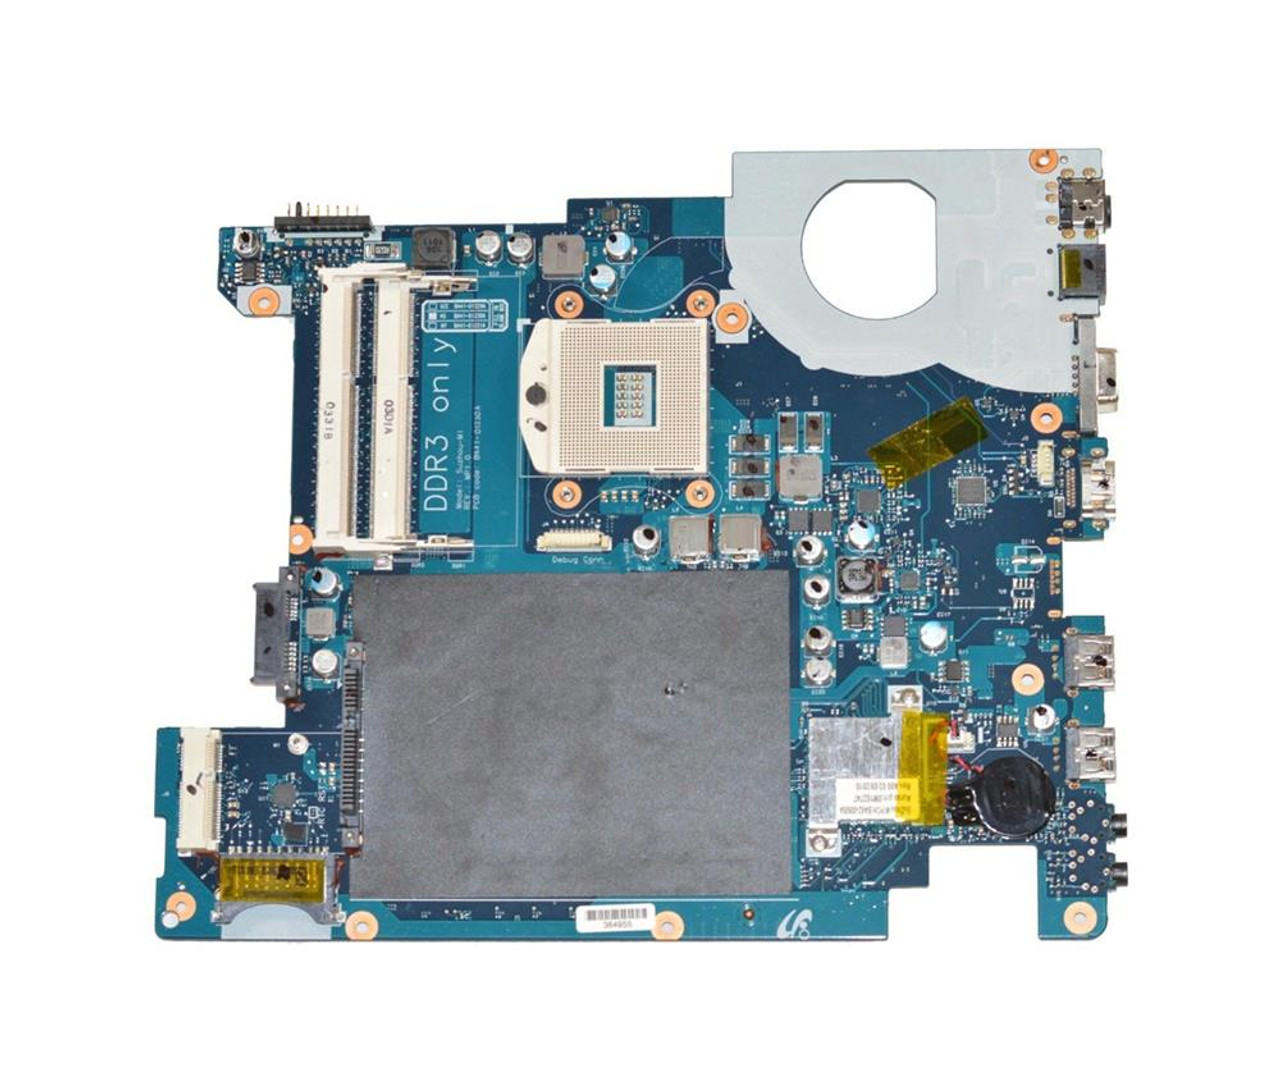 BA92-06357A Samsung System Board (Motherboard) for R480 (Refurbished)